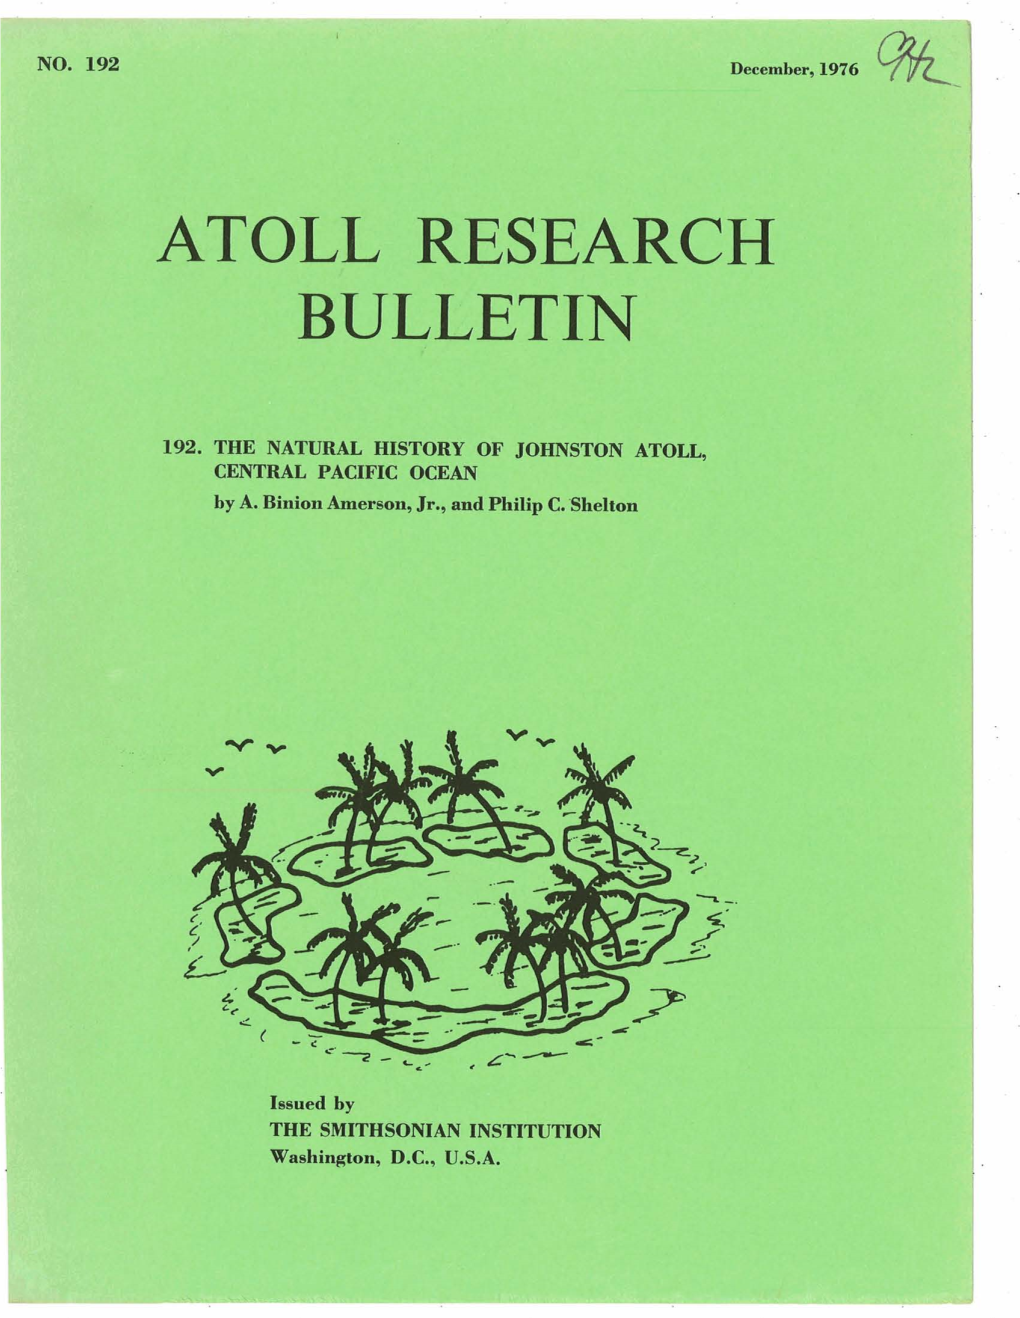 Atoll Research Bulletin